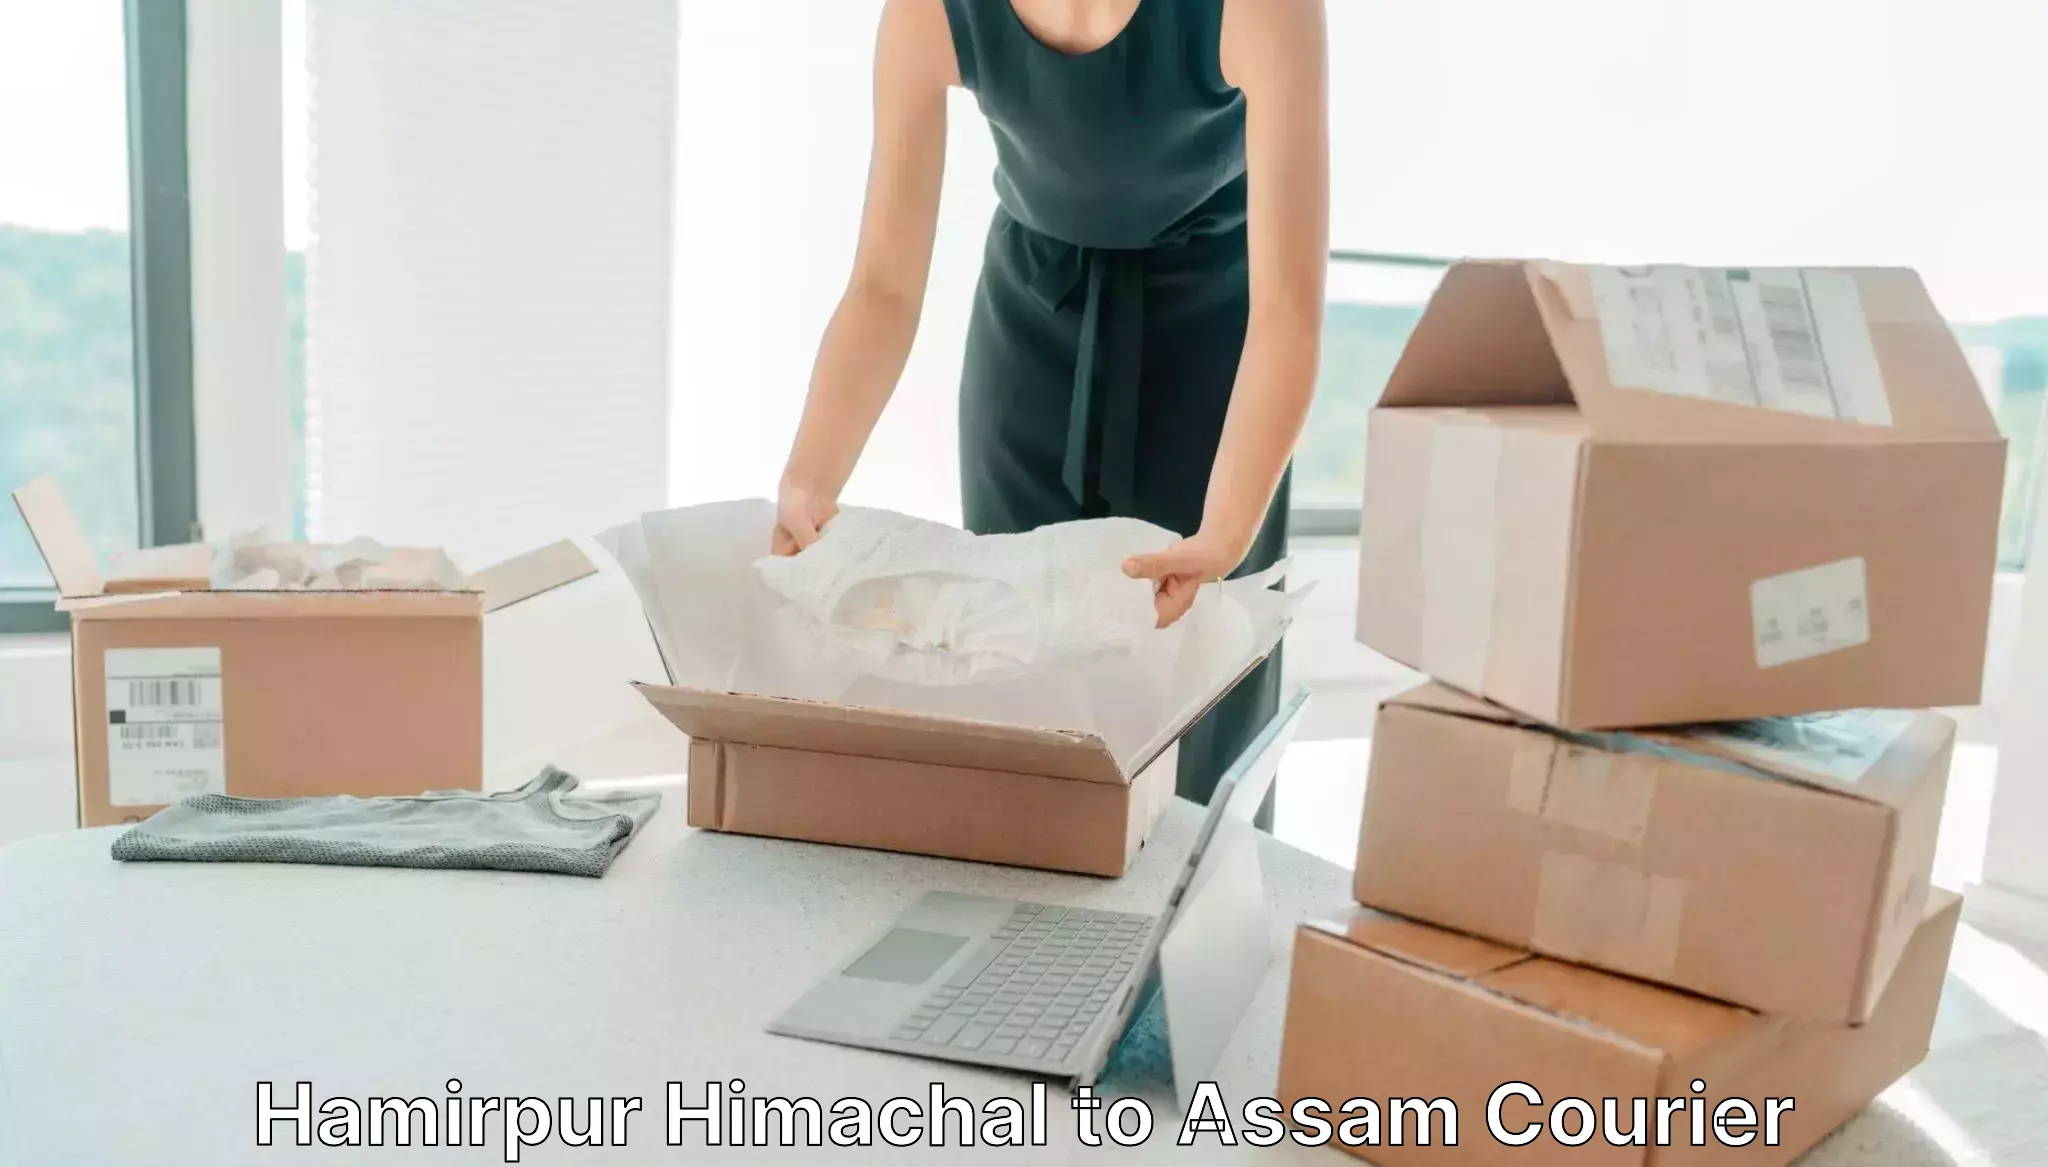 Reliable courier service Hamirpur Himachal to Dehurda